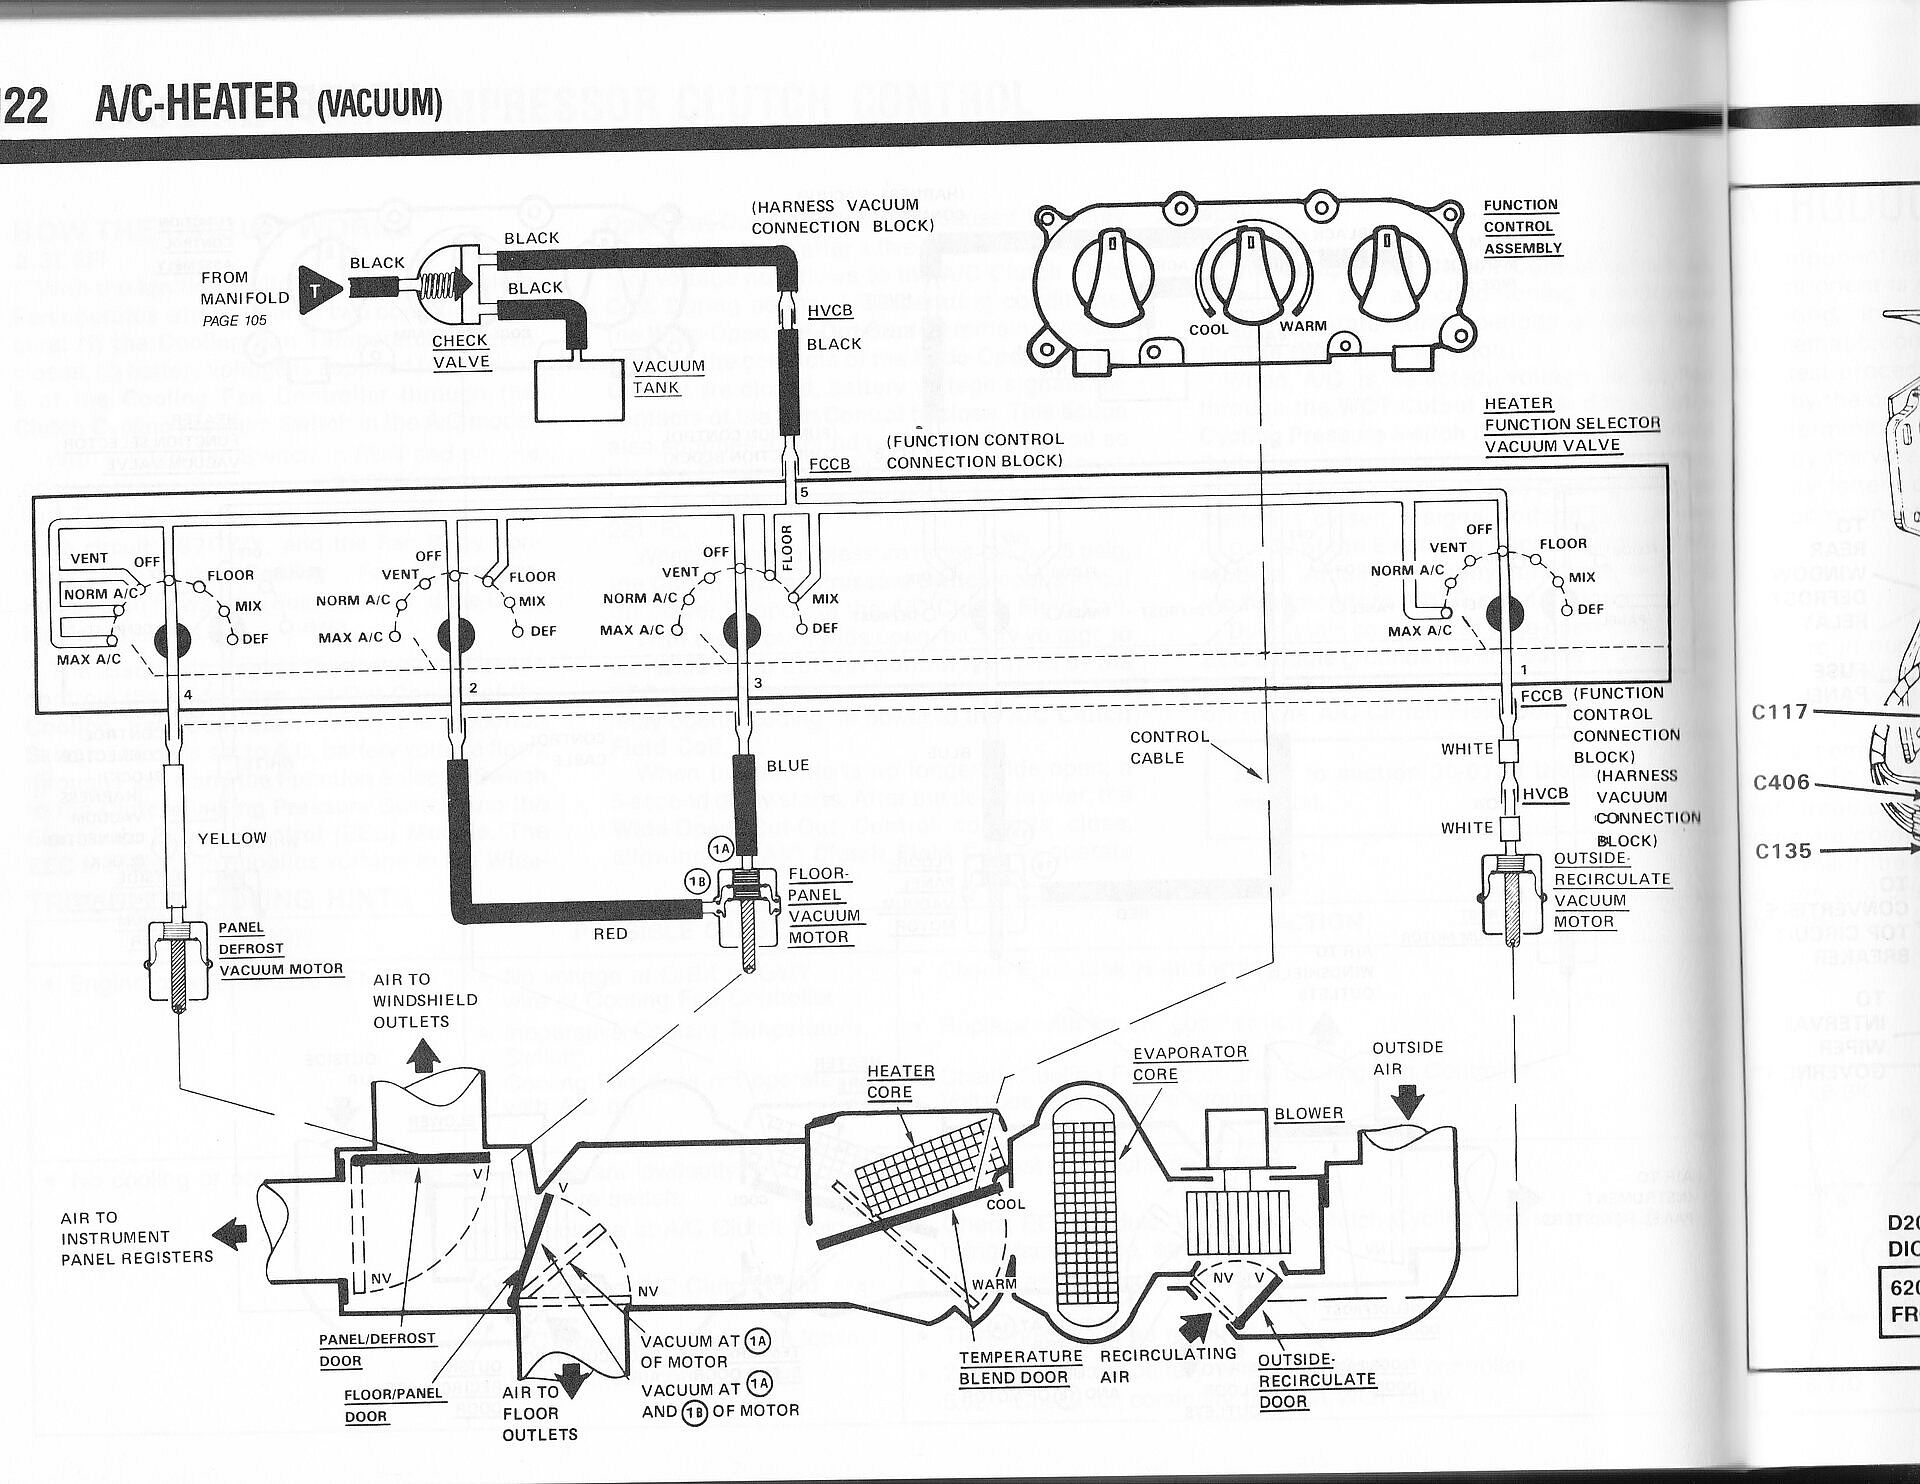 1989 A-C & Heater vacuum plumbing.jpg